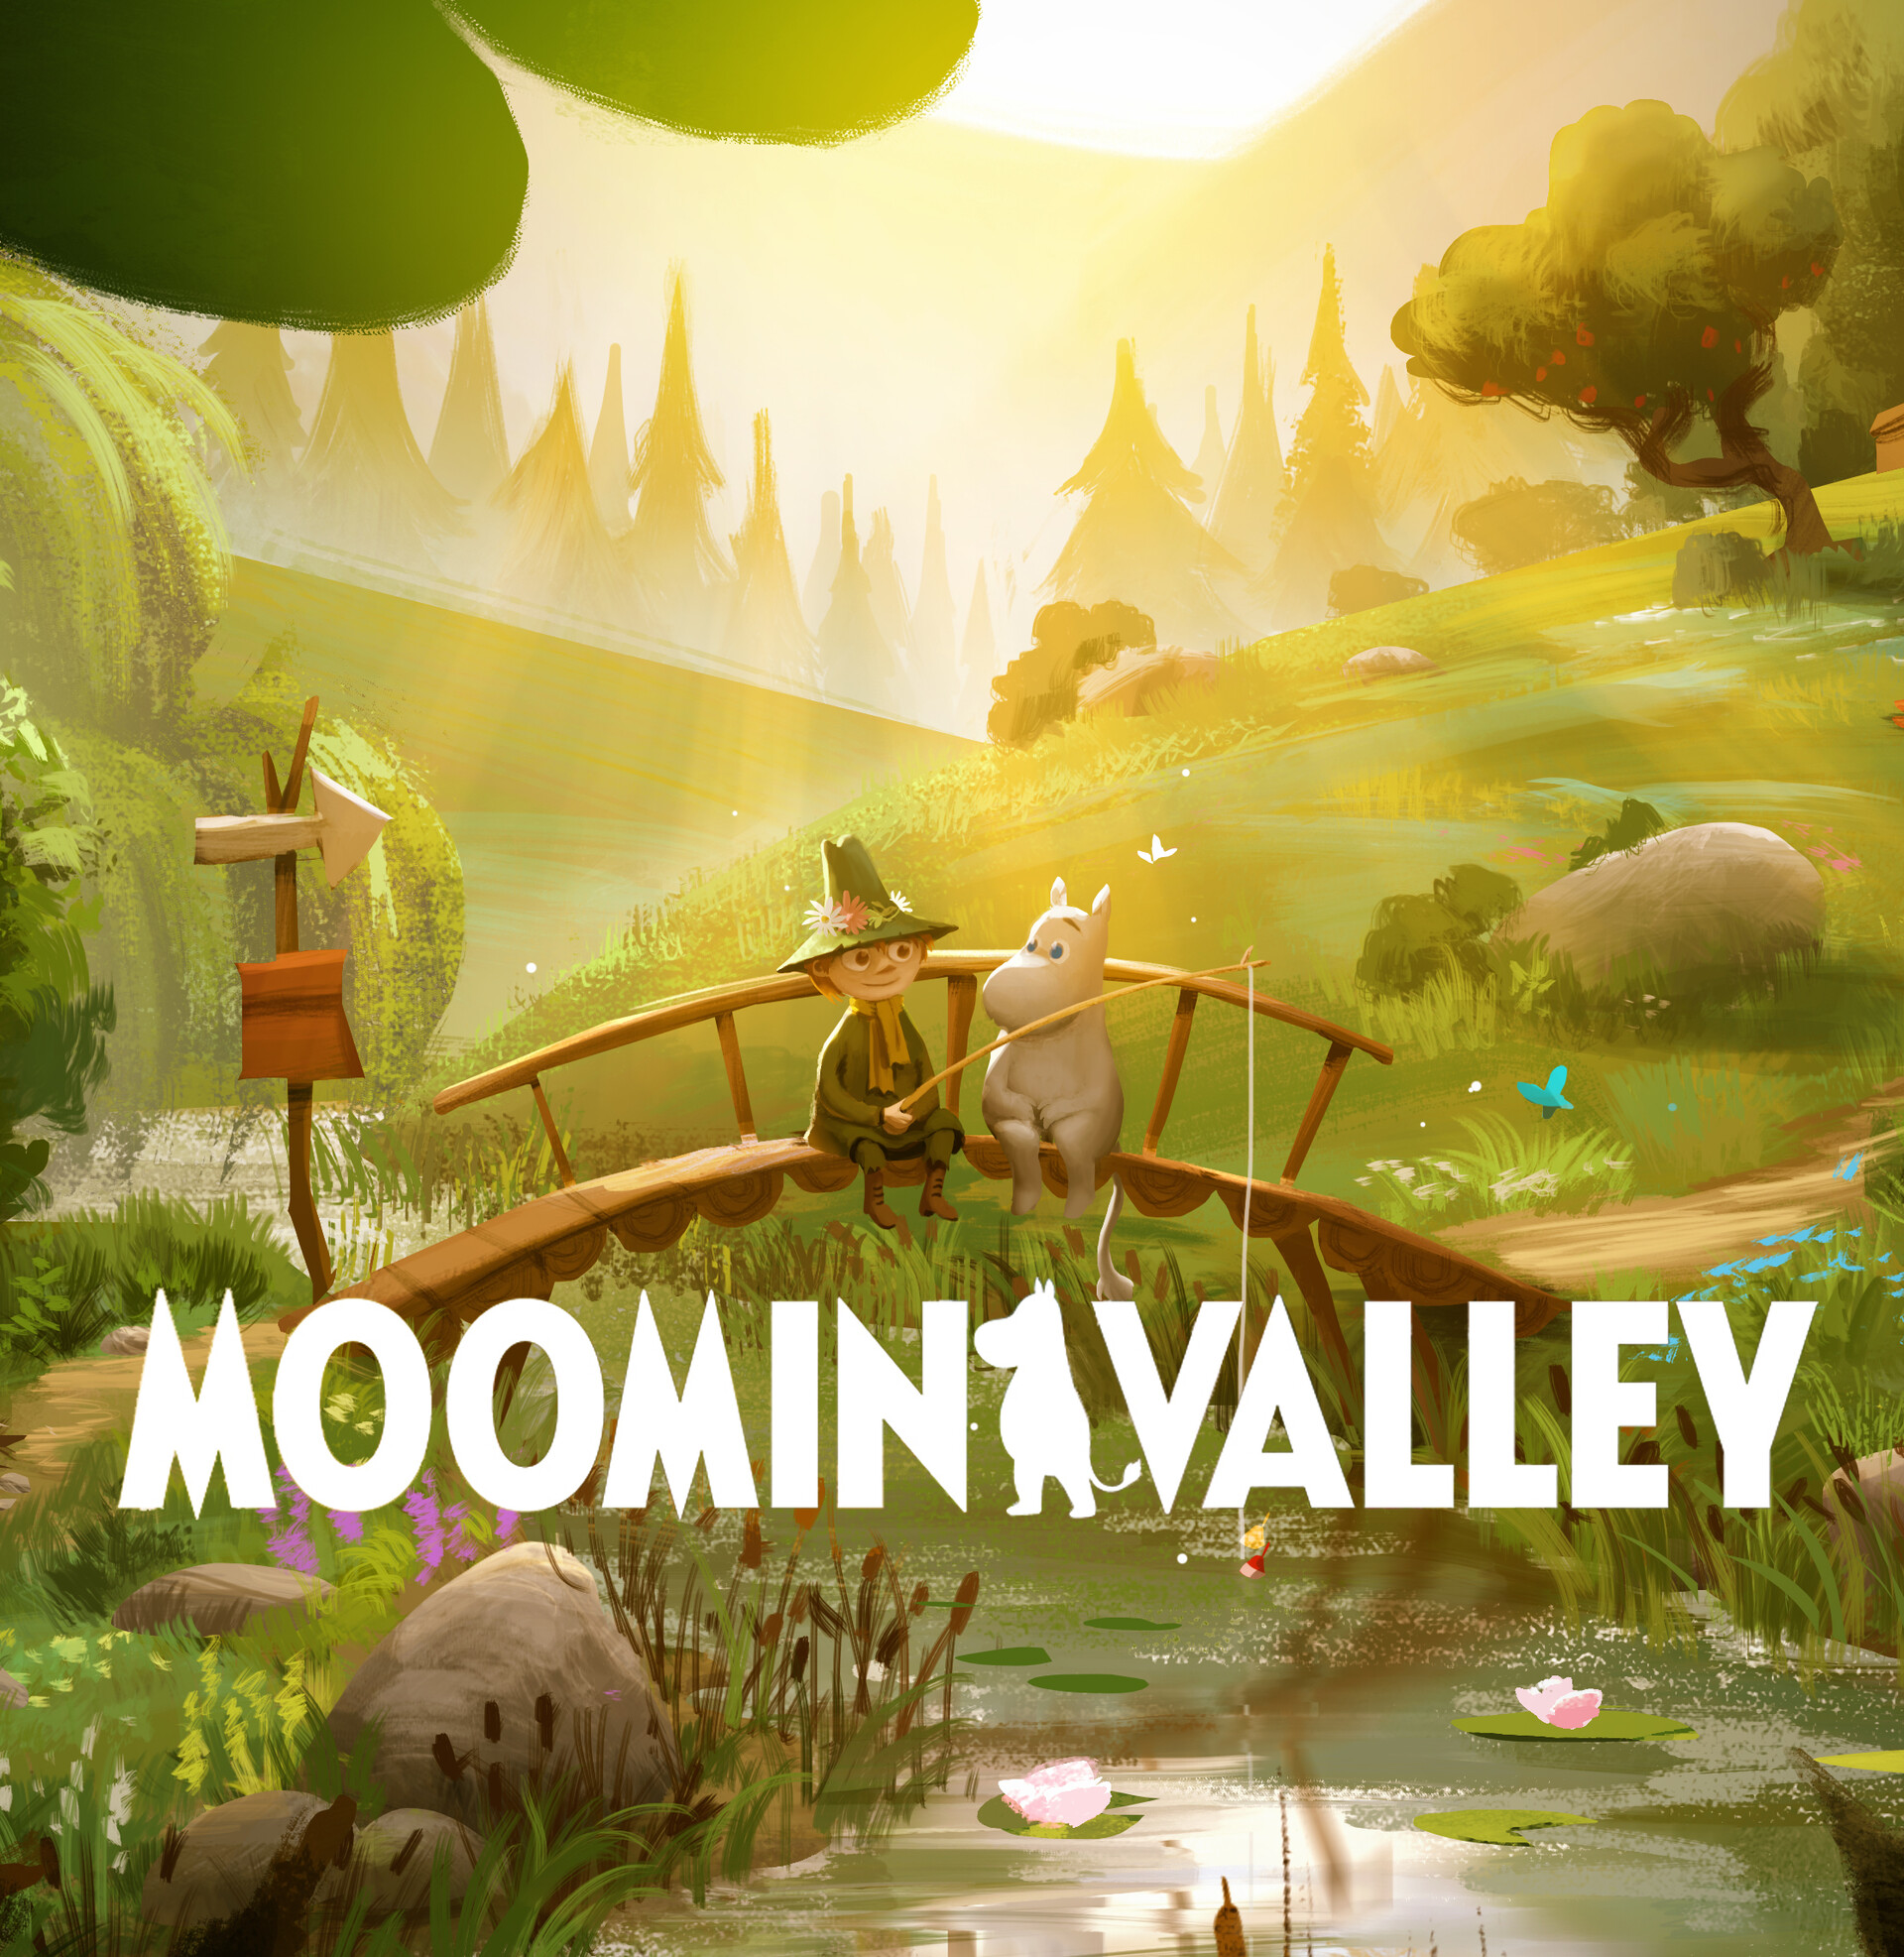 moomin valley image